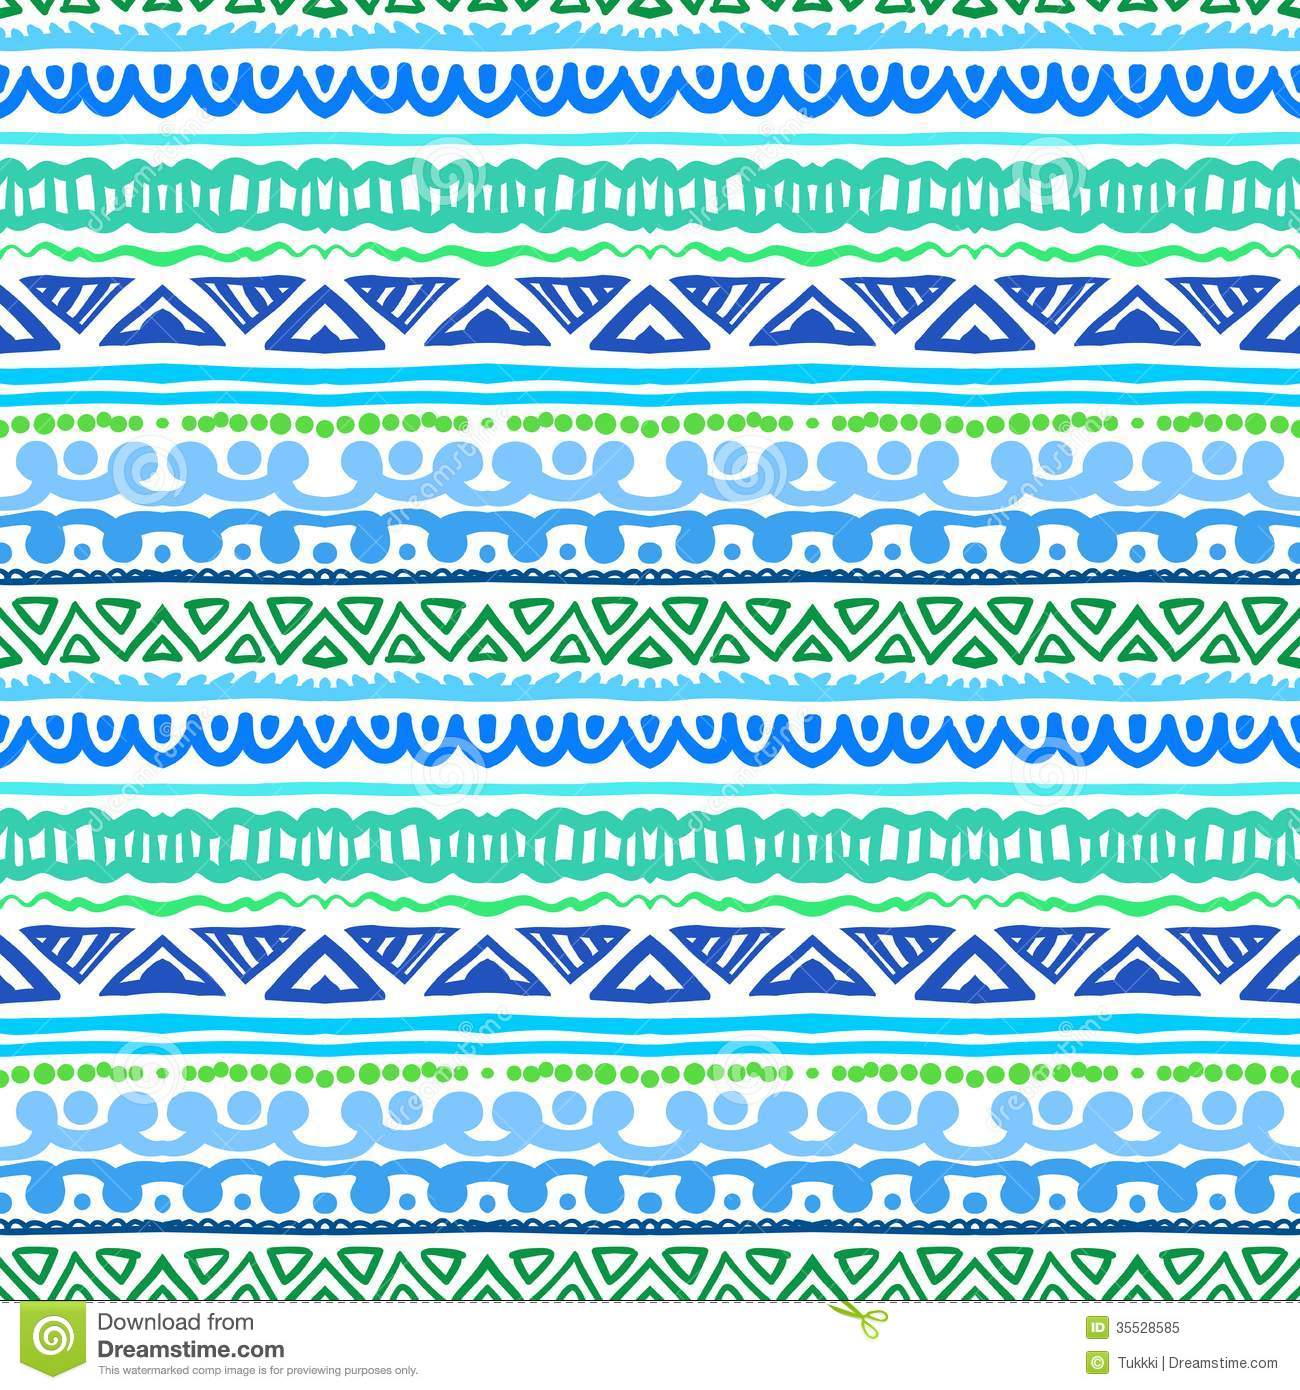 Free download Tribal Print Pattern Wallpaper Striped ethnic pattern in  vibrant blue [1300x1390] for your Desktop, Mobile & Tablet | Explore 48+  Print Wallpaper Designs | Paw Print Wallpaper, Blue Print Wallpaper,